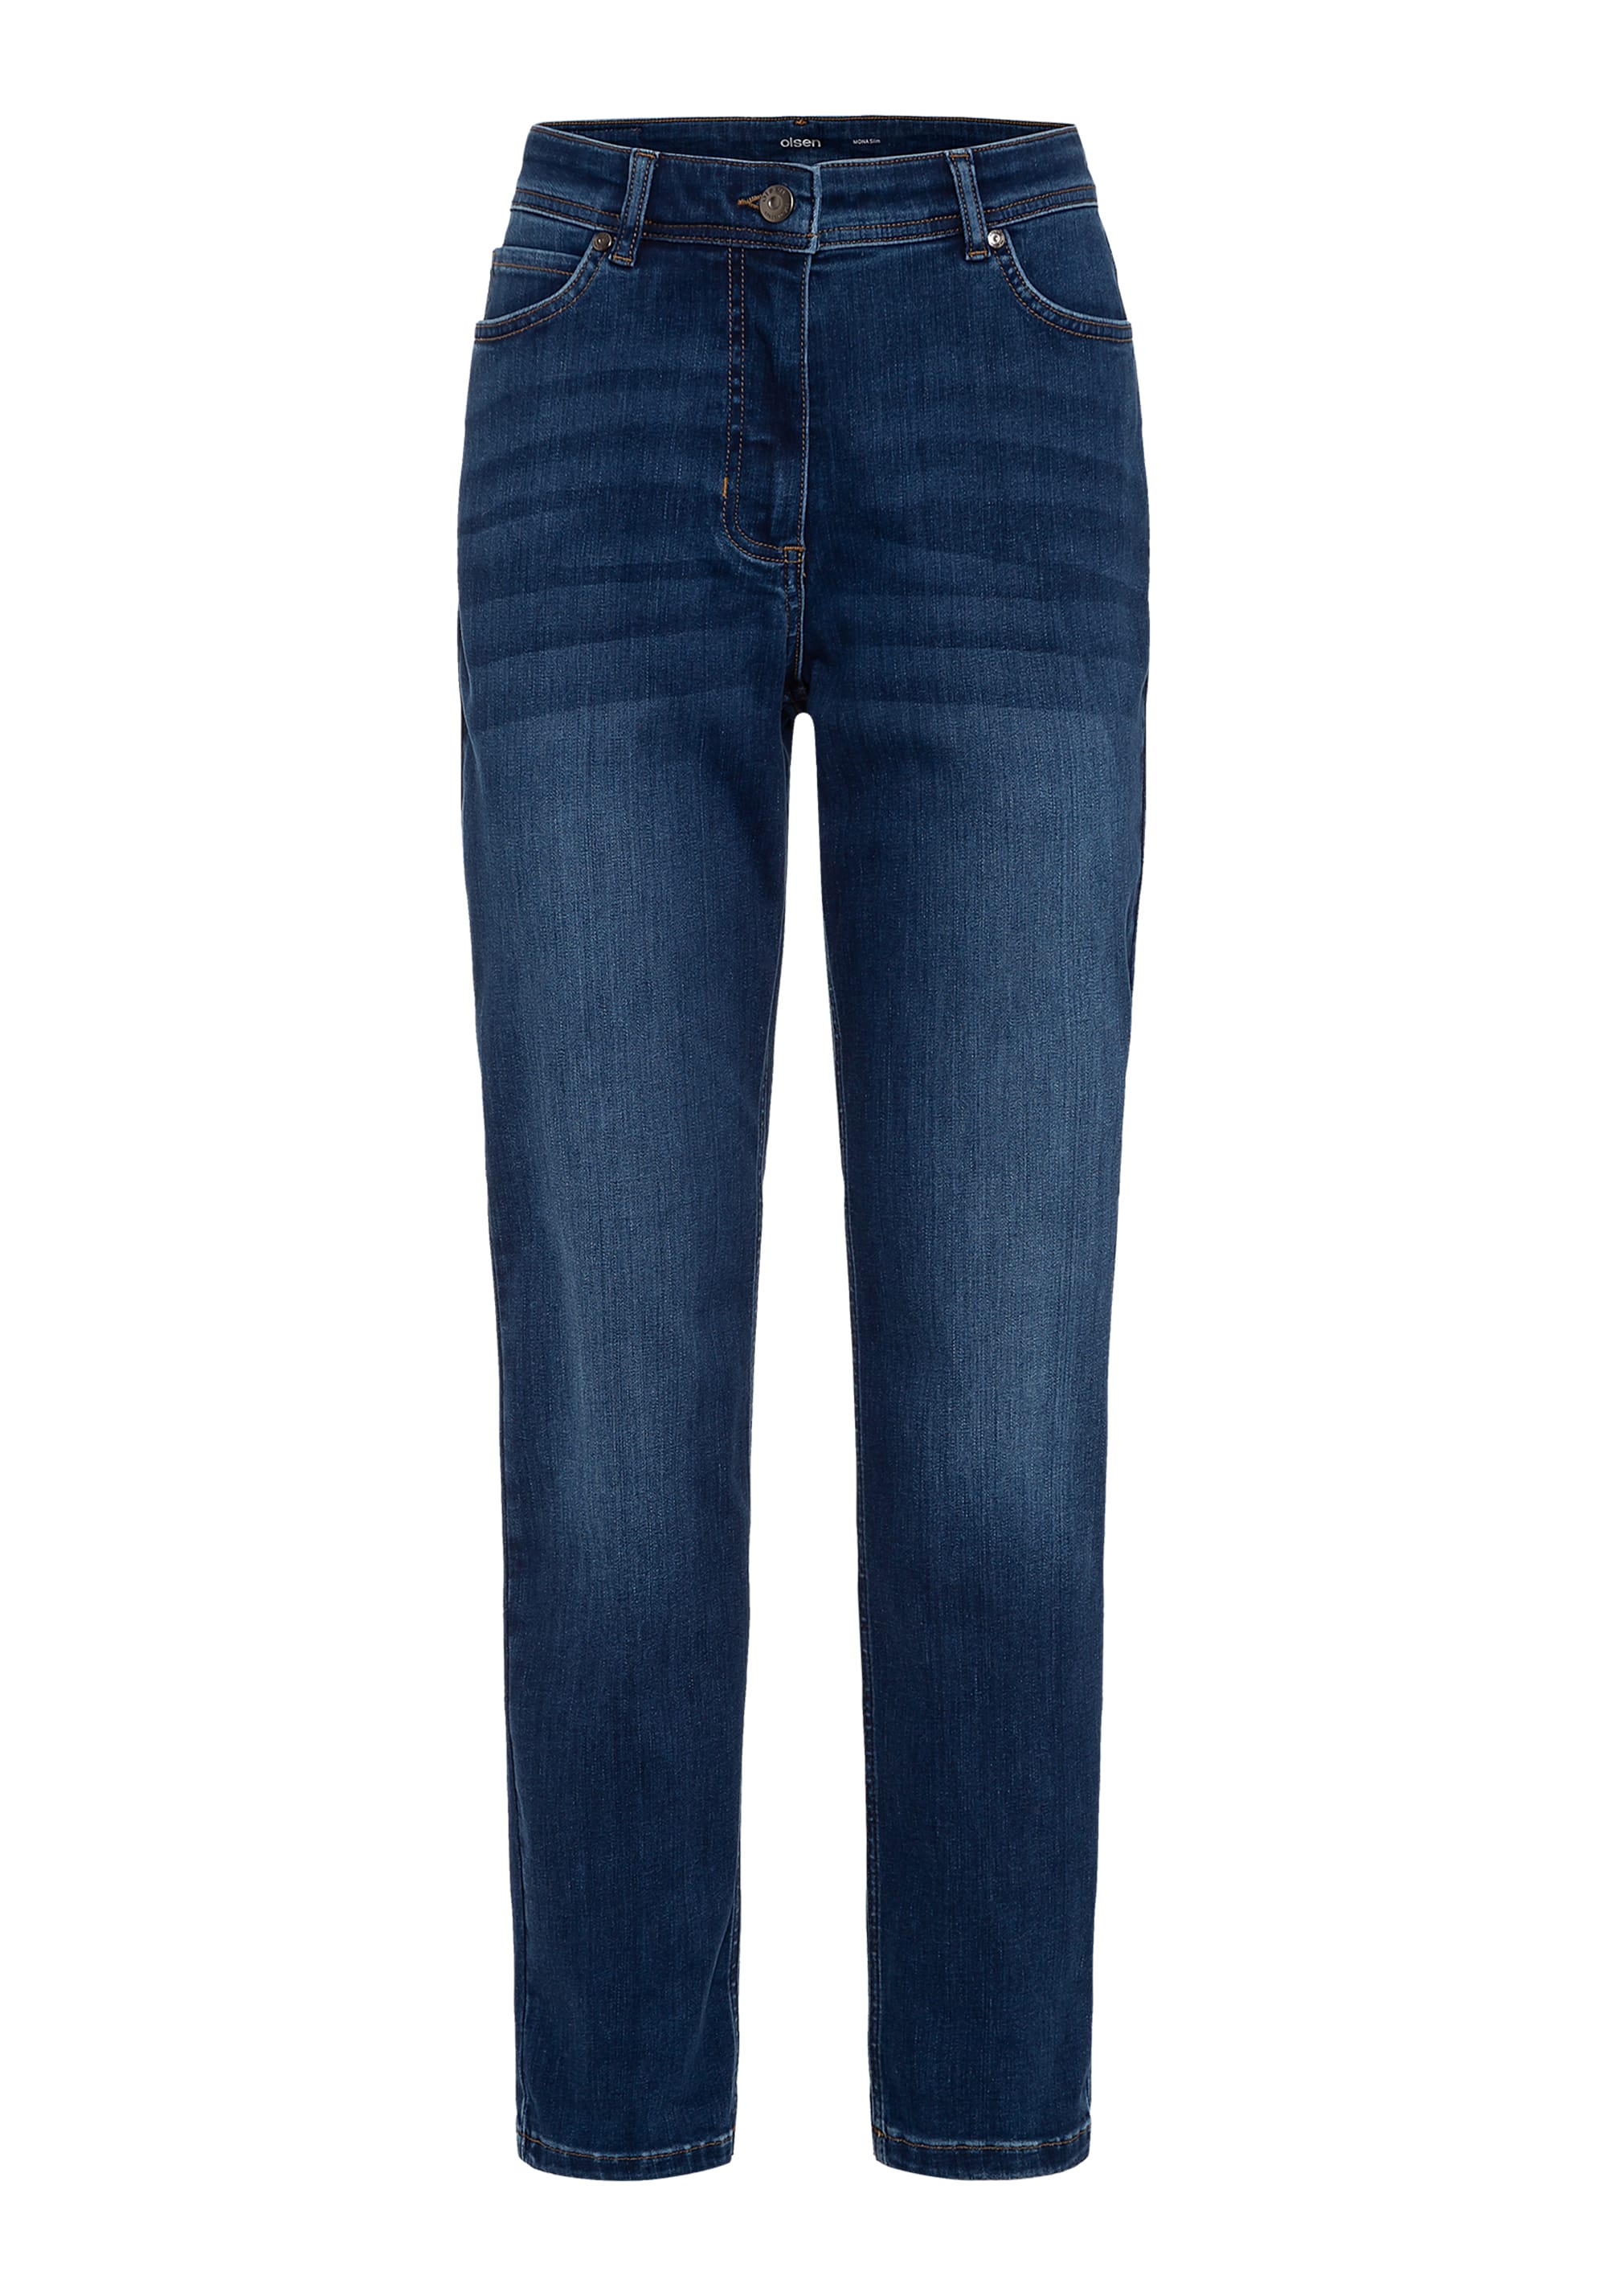 Mona Fit Slim Leg Power Stretch Jean containing REPREVE® - Olsen